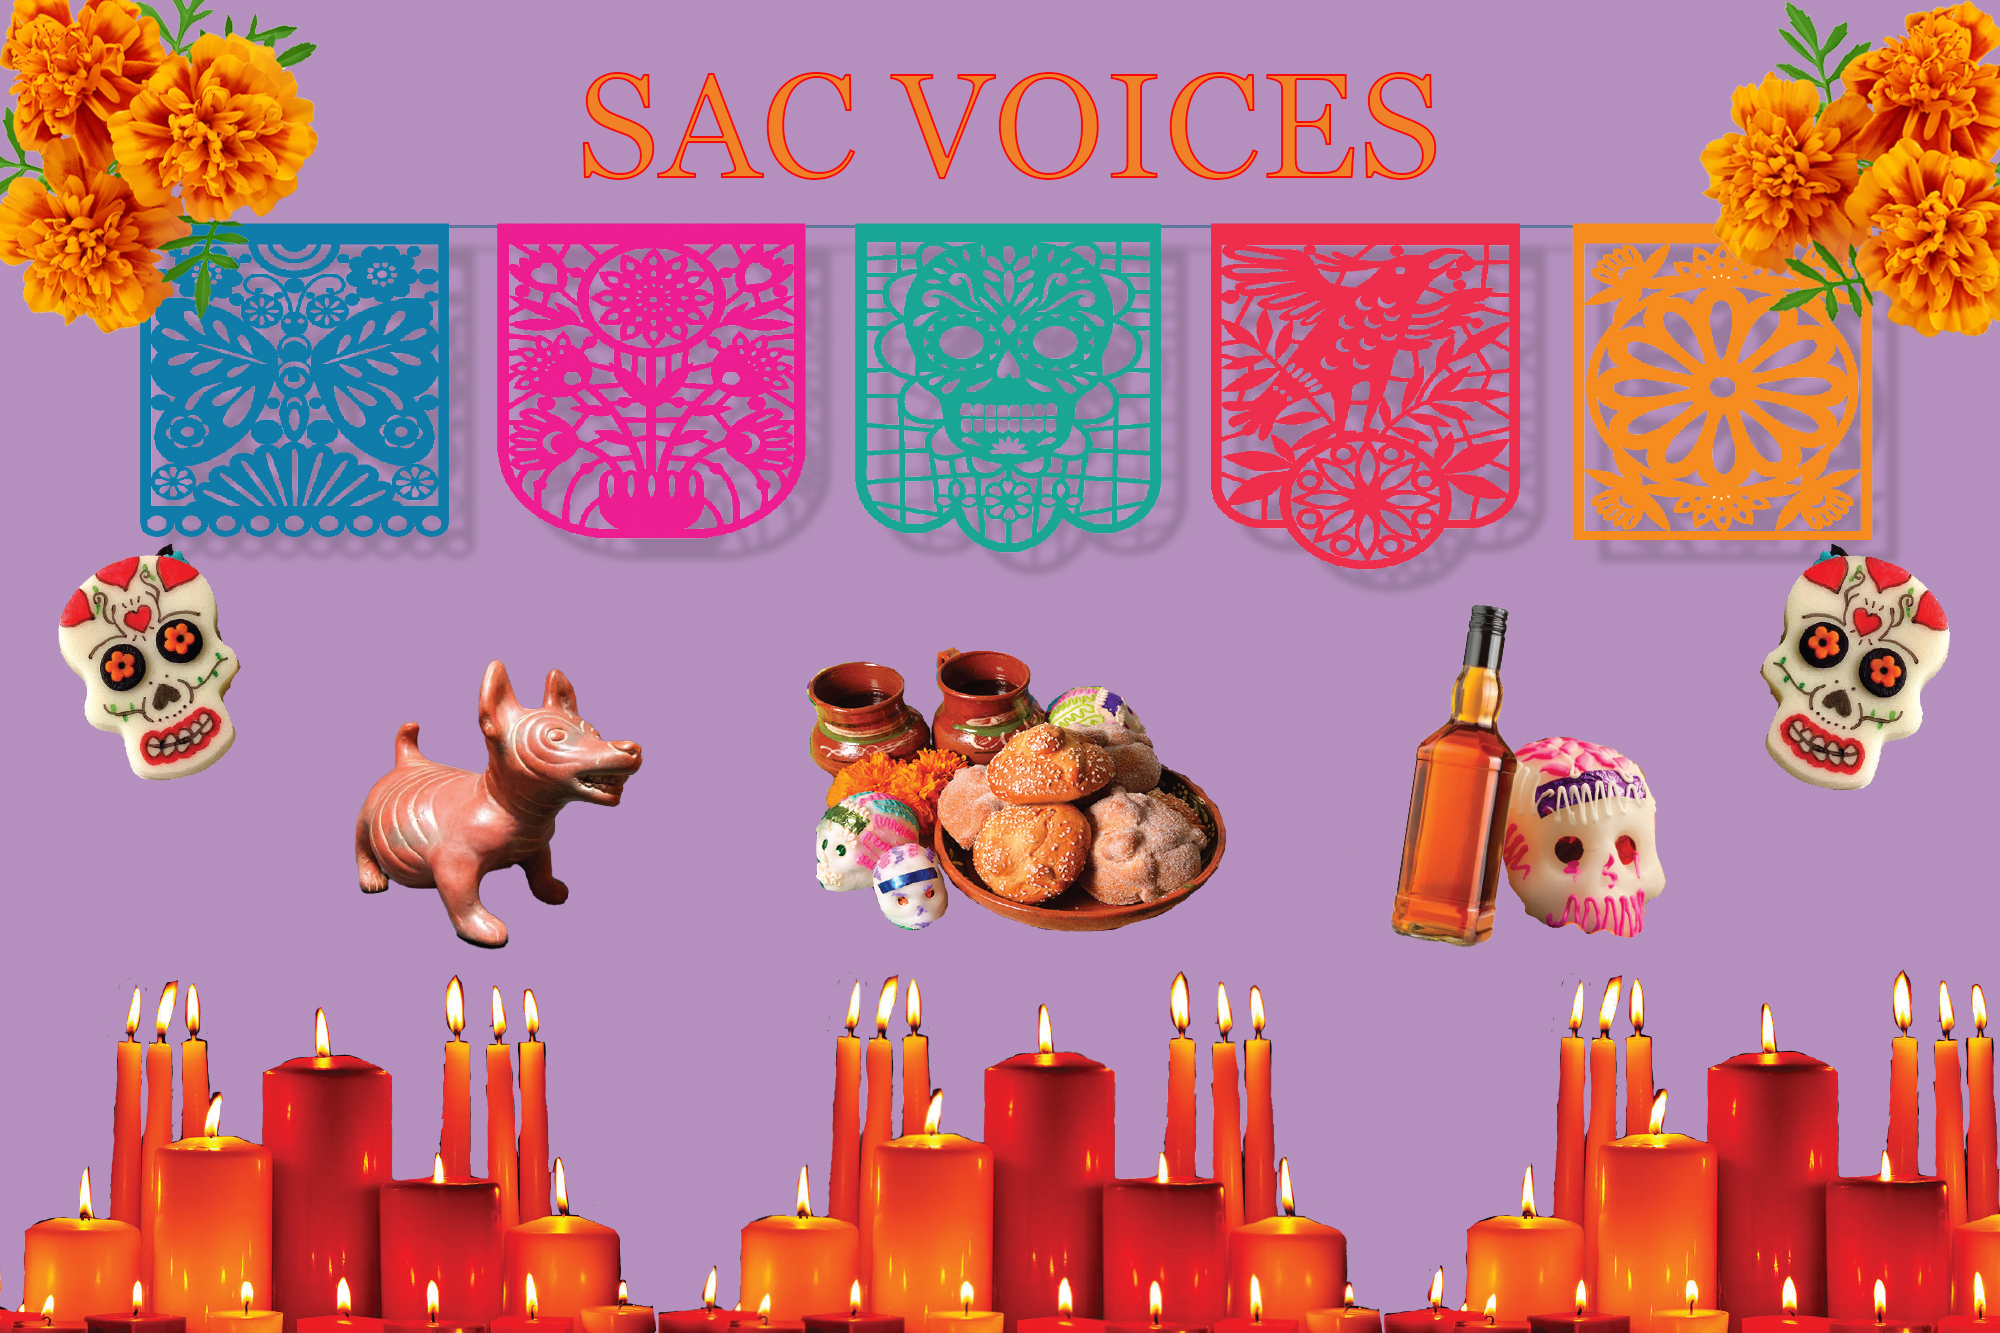 SAC voices